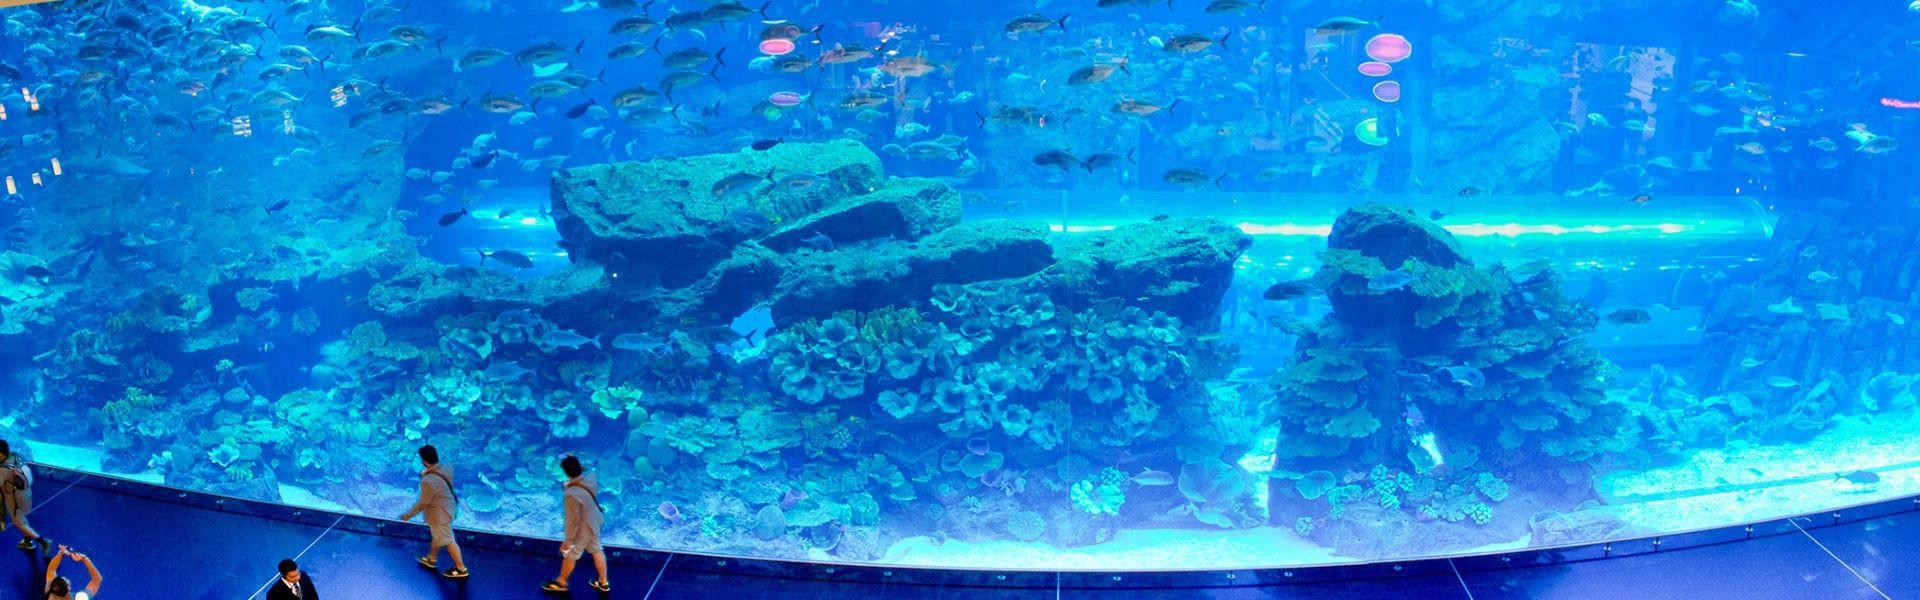 آکواریوم دبی  aquariym dubai